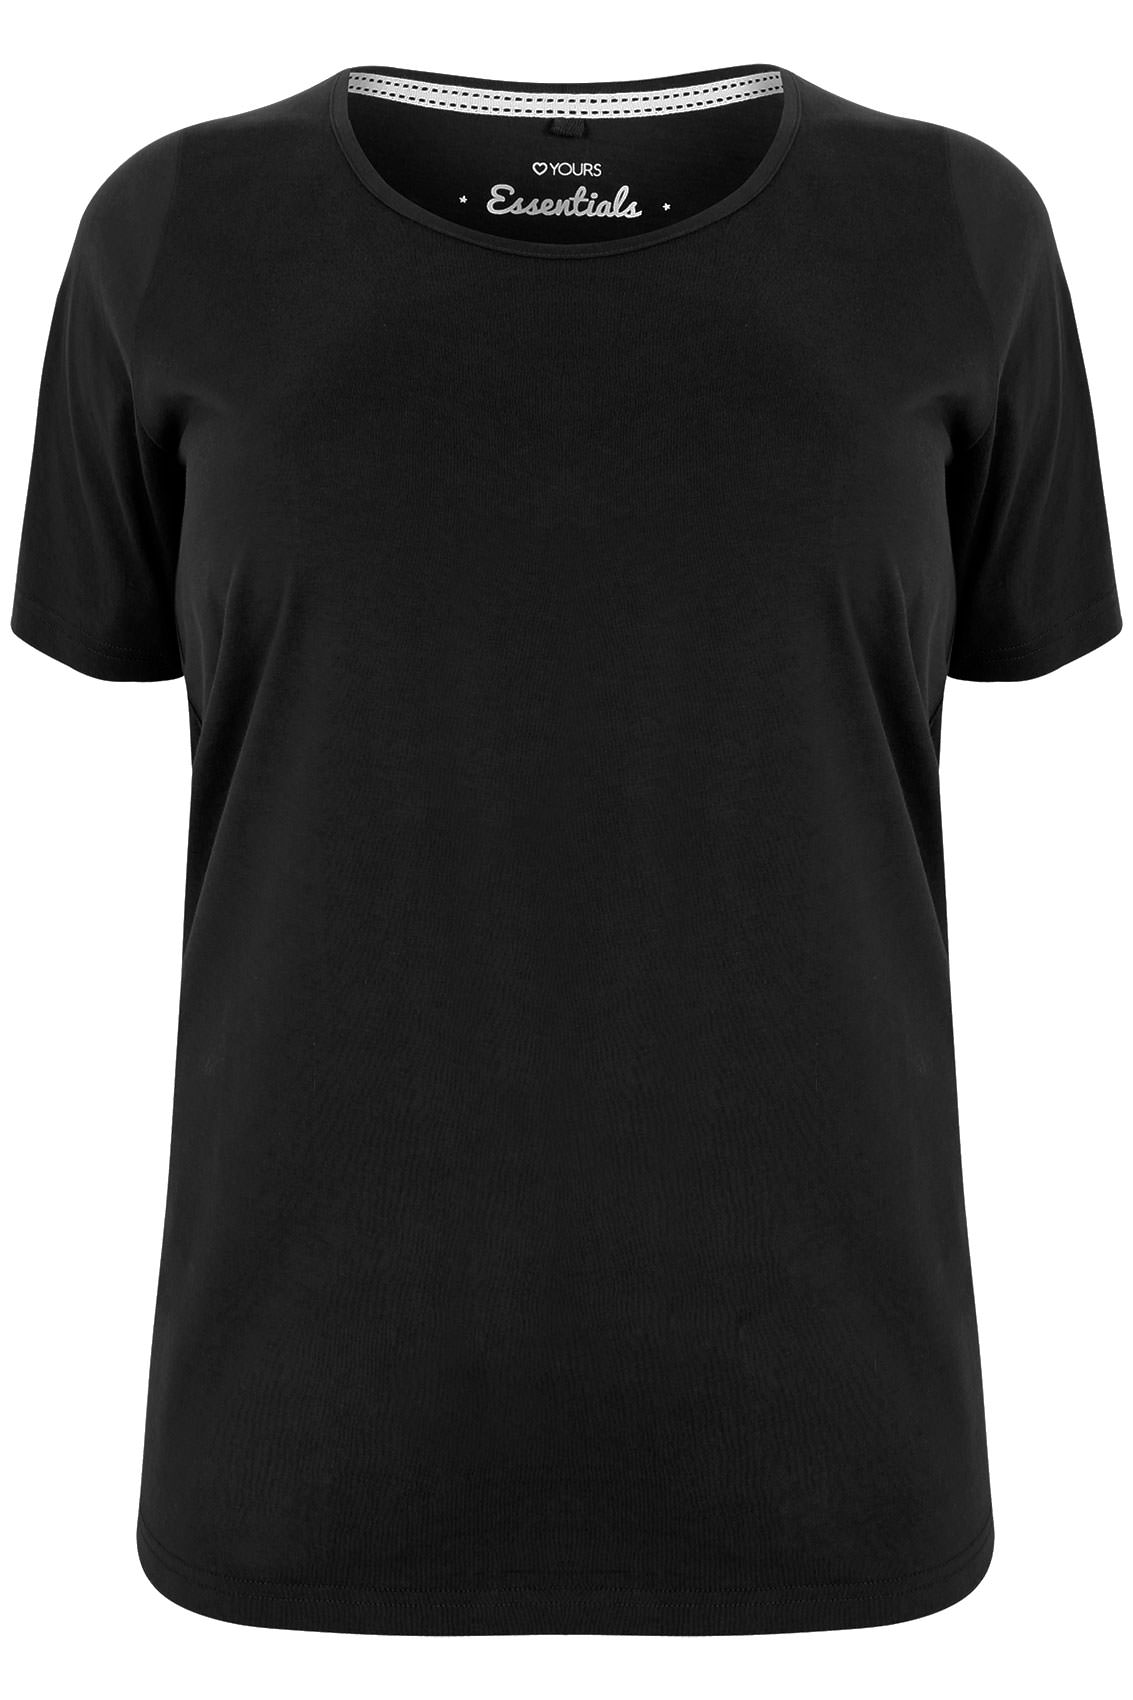 Black Scoop Neck Basic T-Shirt, Plus size 16 to 36